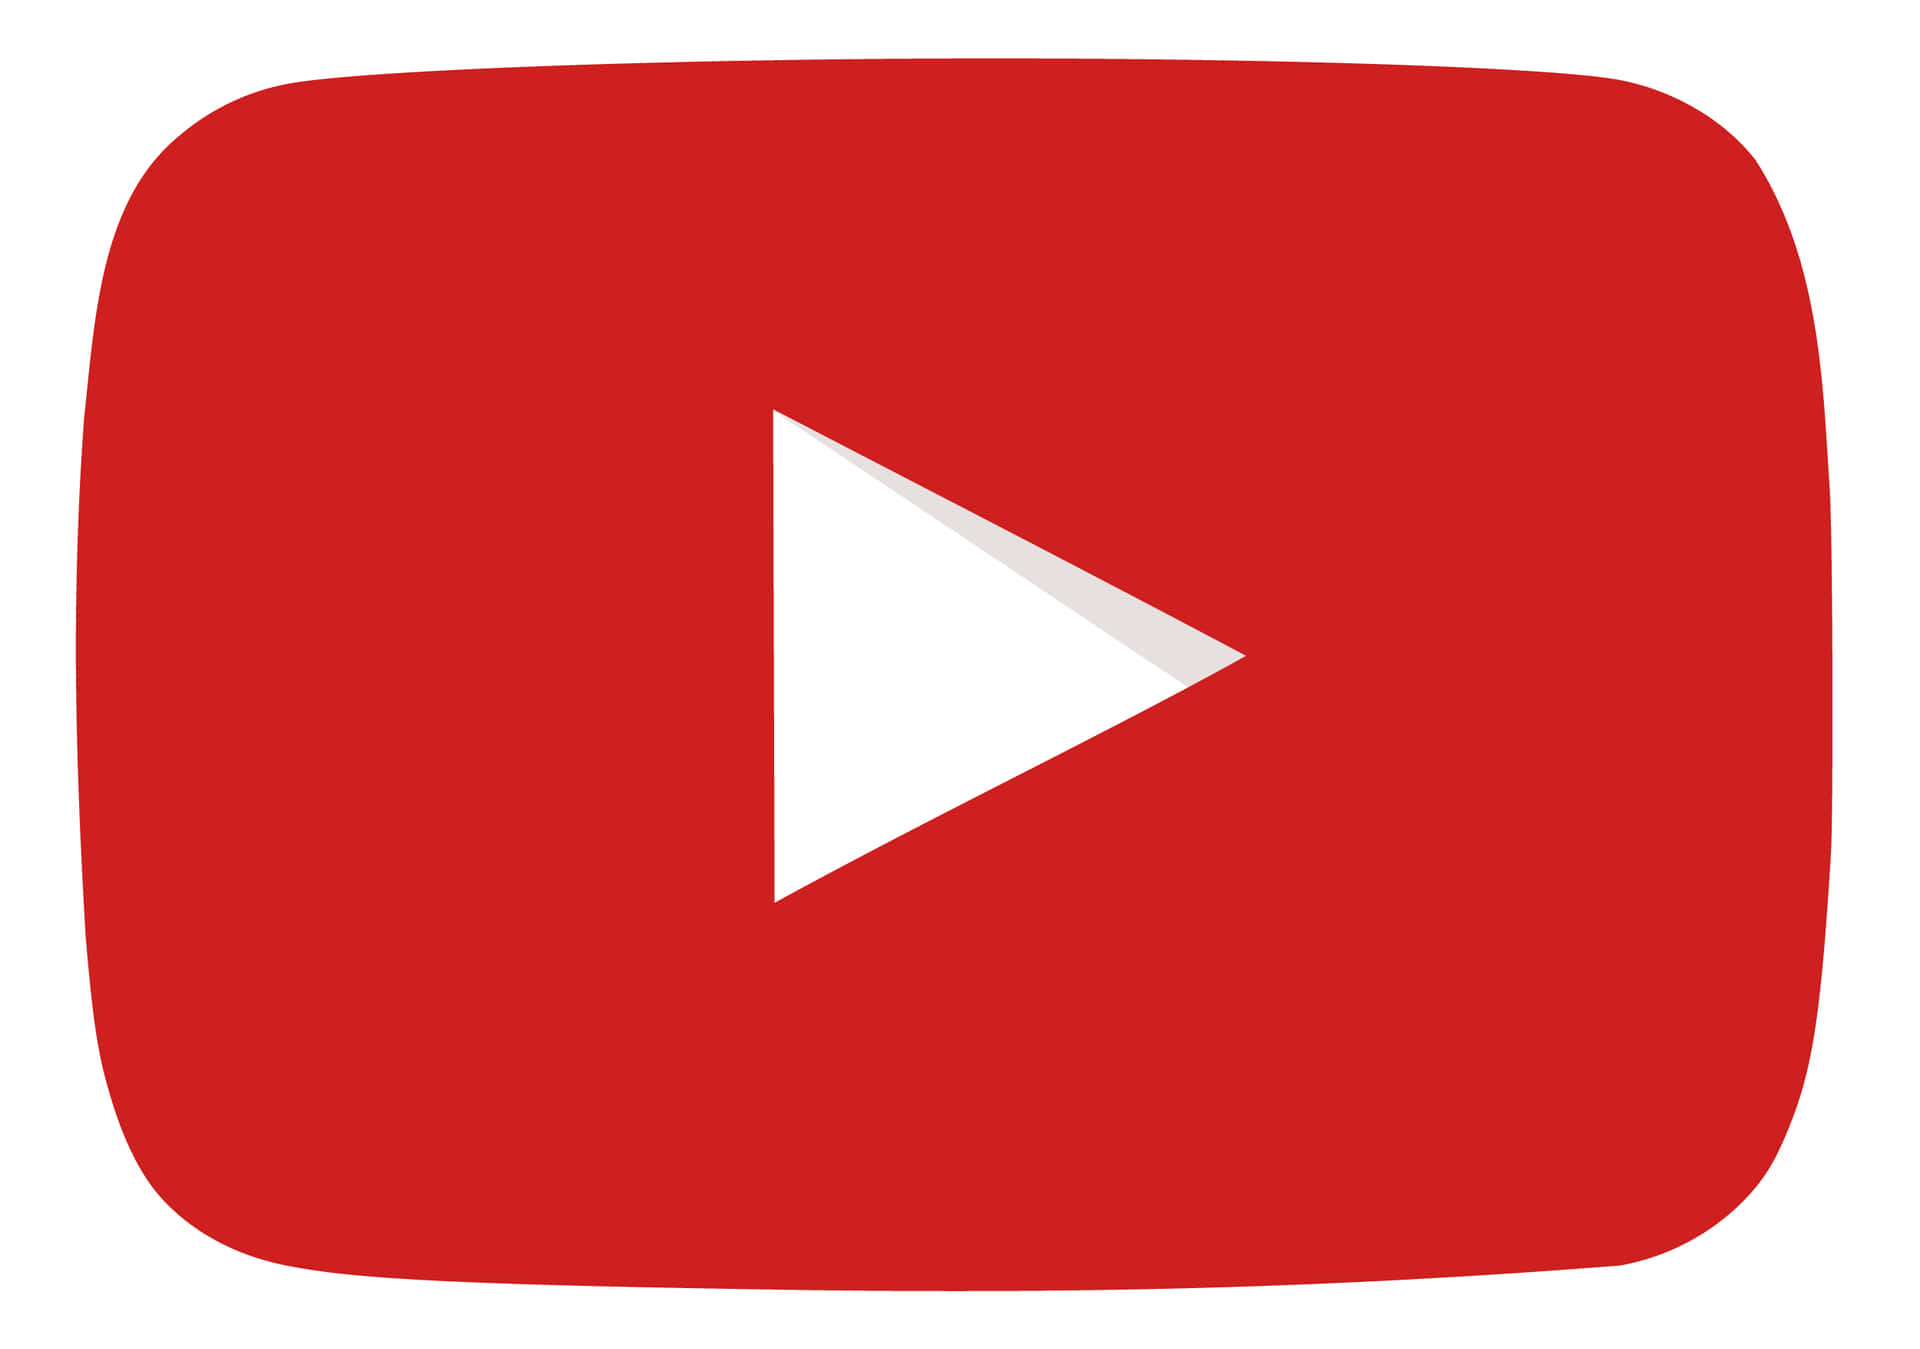 Vibrant Red YouTube Logo on Black Background